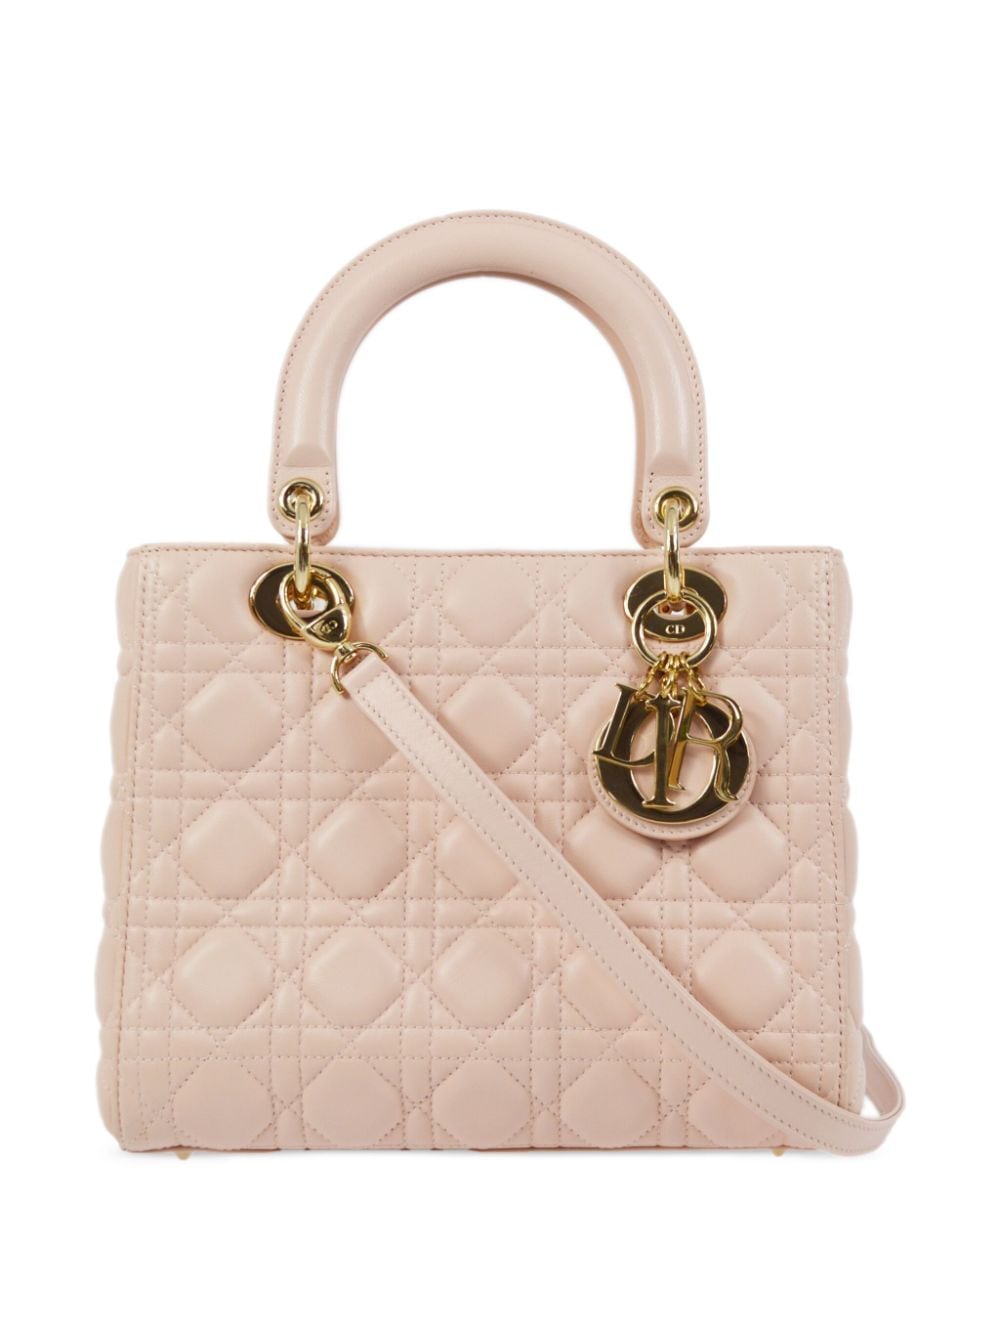 2014 Lady Dior Cannage 2way handbag